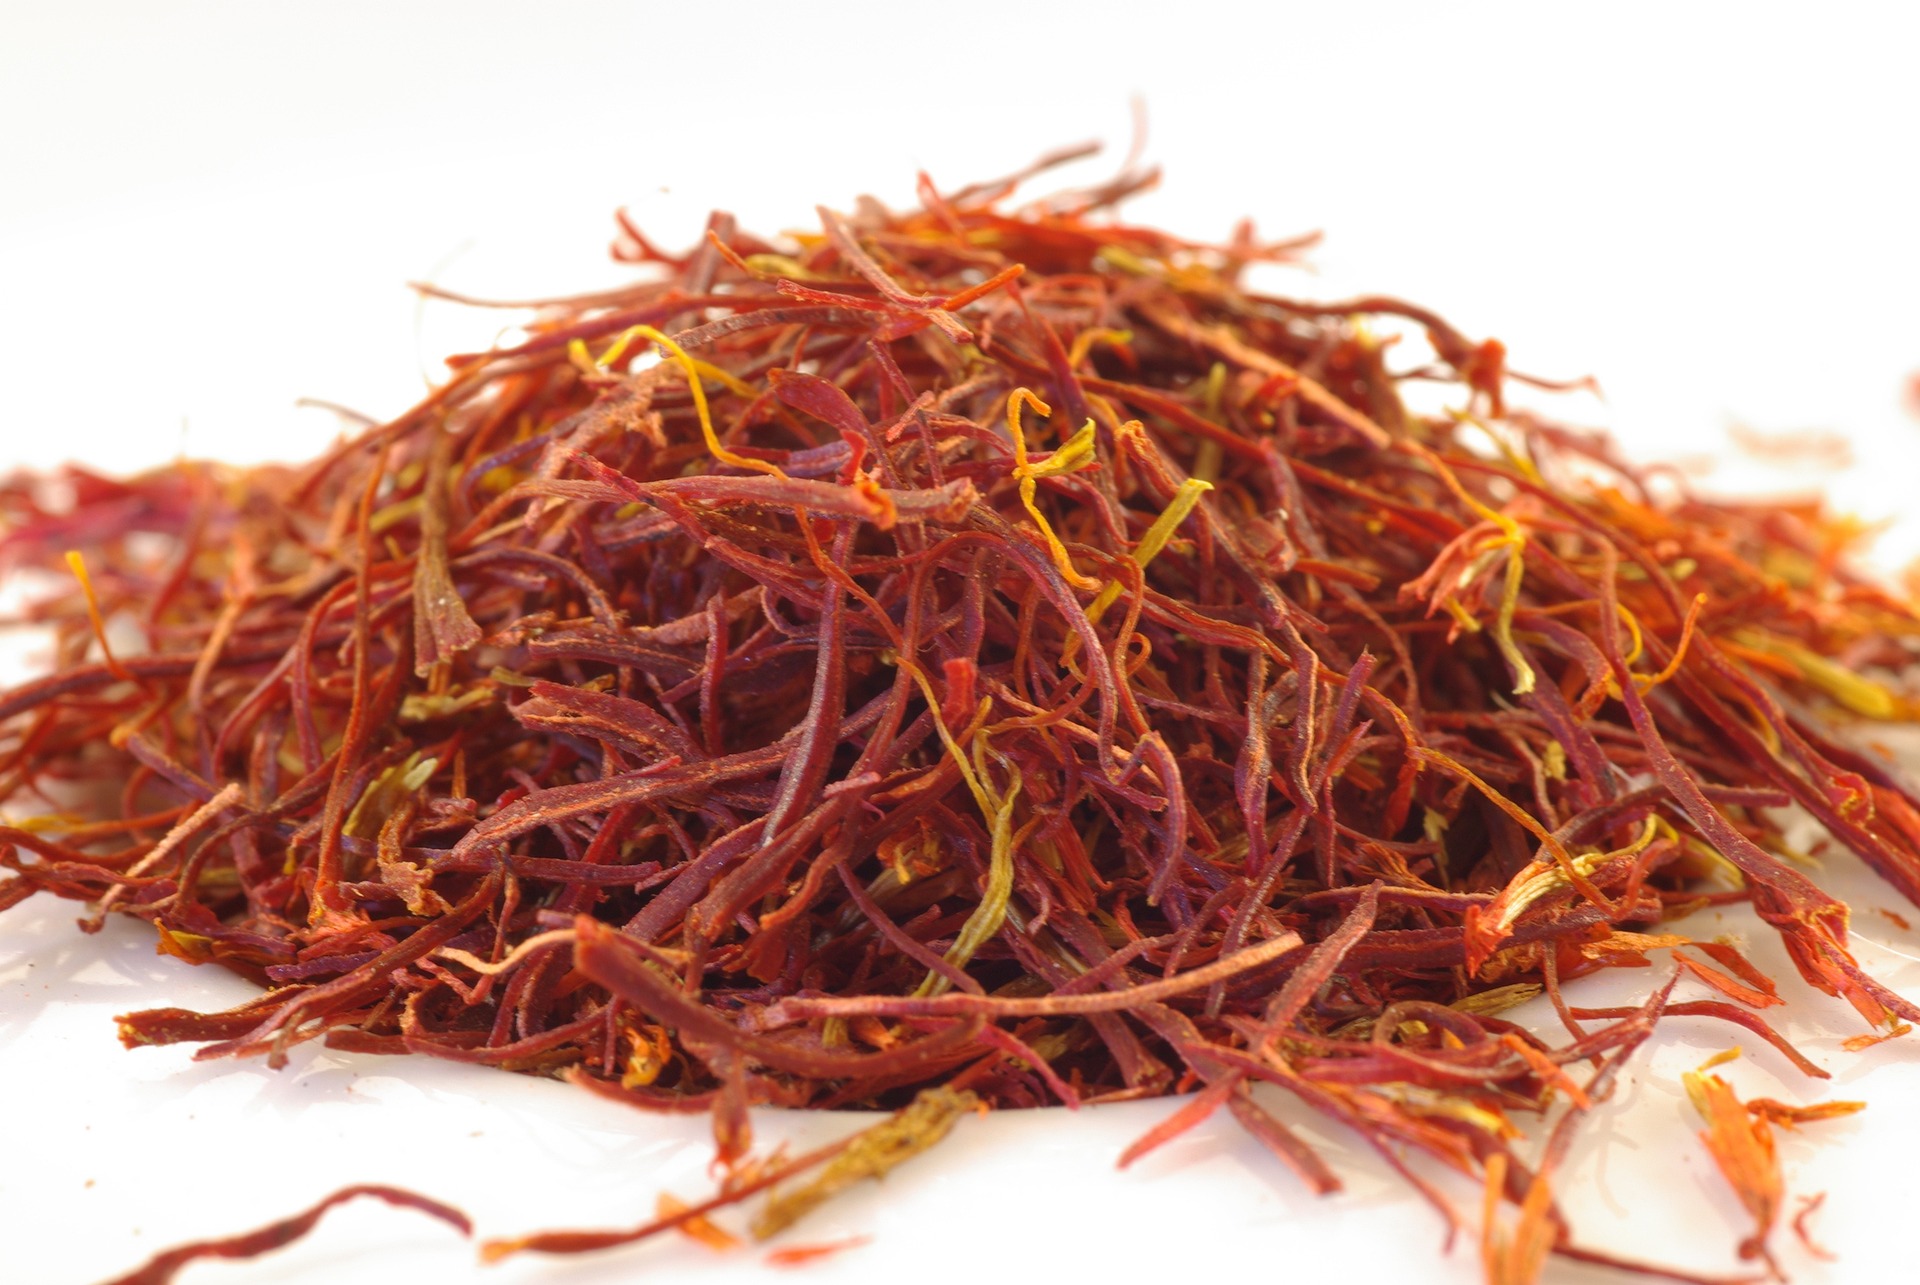 The Holy Saffron – A Powerful Antioxidant & Spiritual Purification